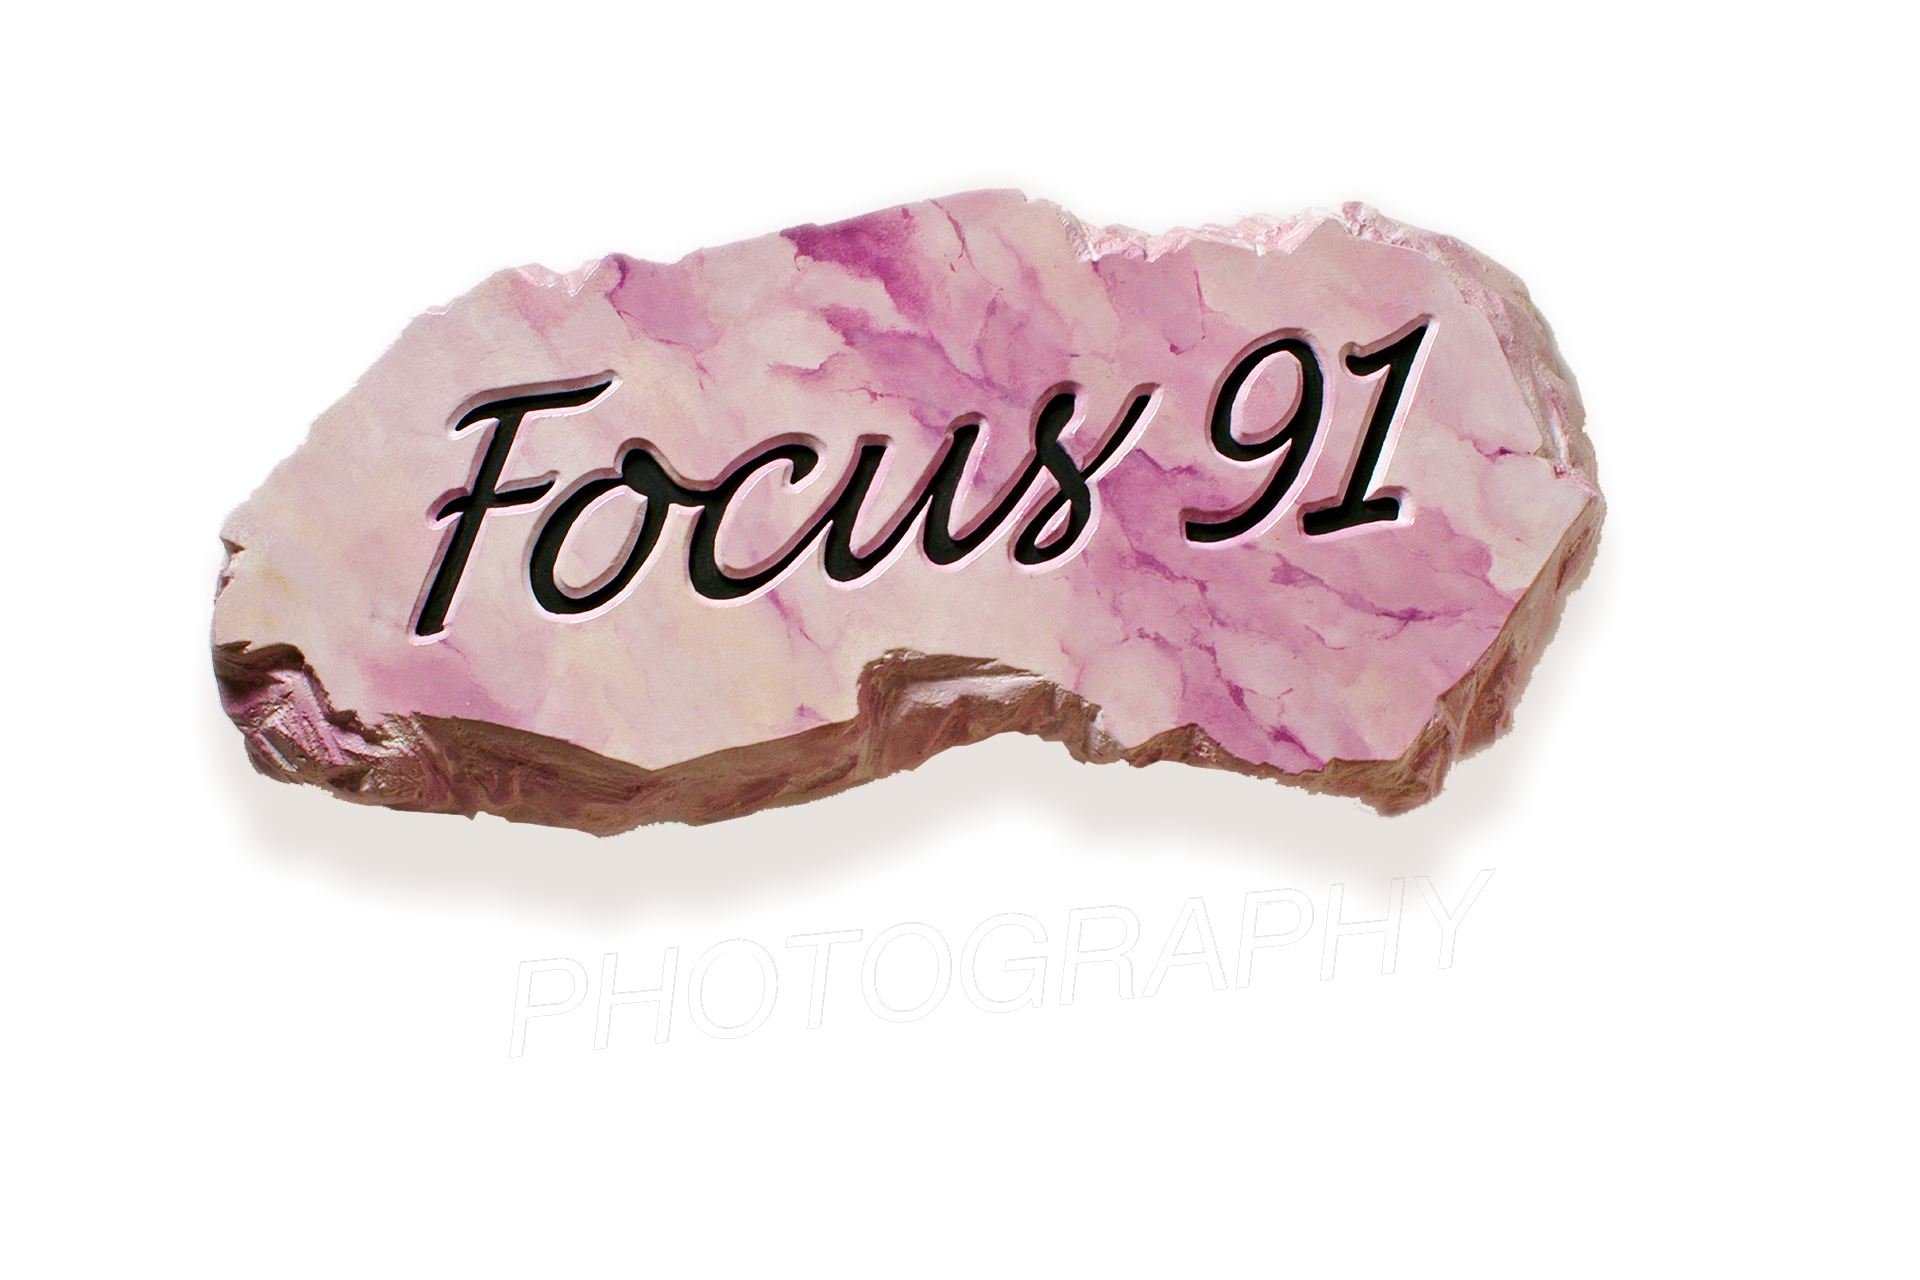 Focus 91 Photography